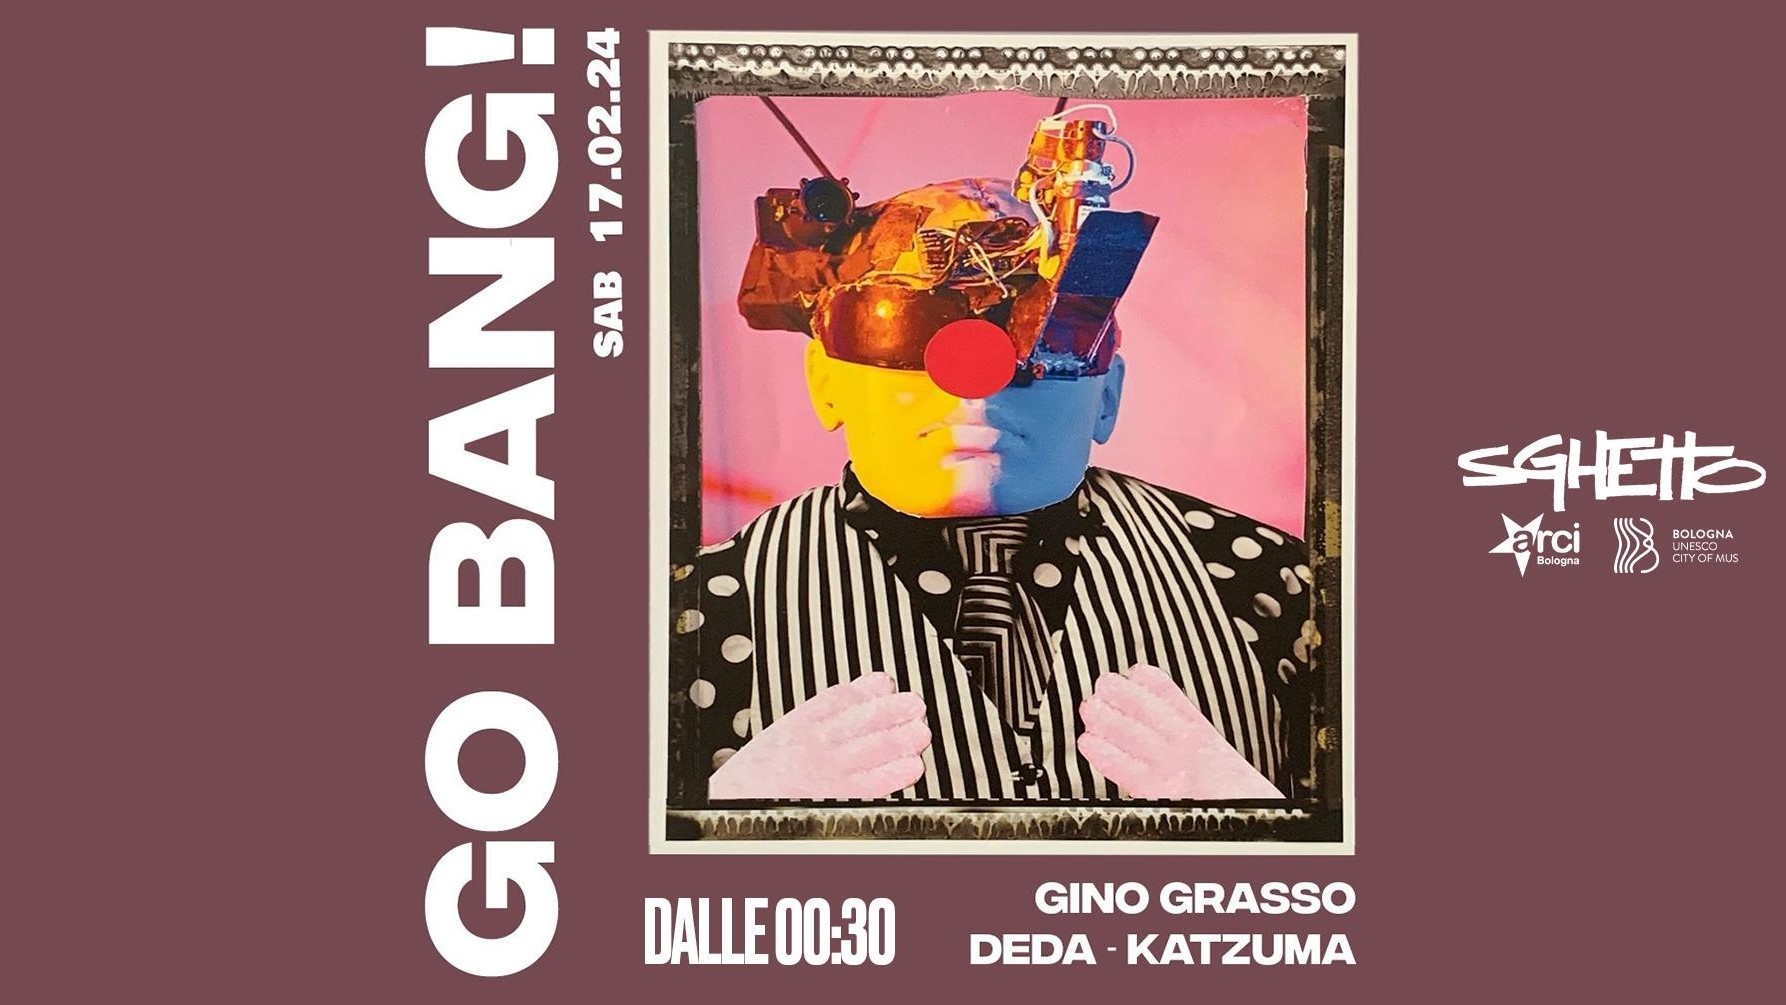 Gino Grasso & Katzuma aka Deda - Go Bang! For the Love of House Music